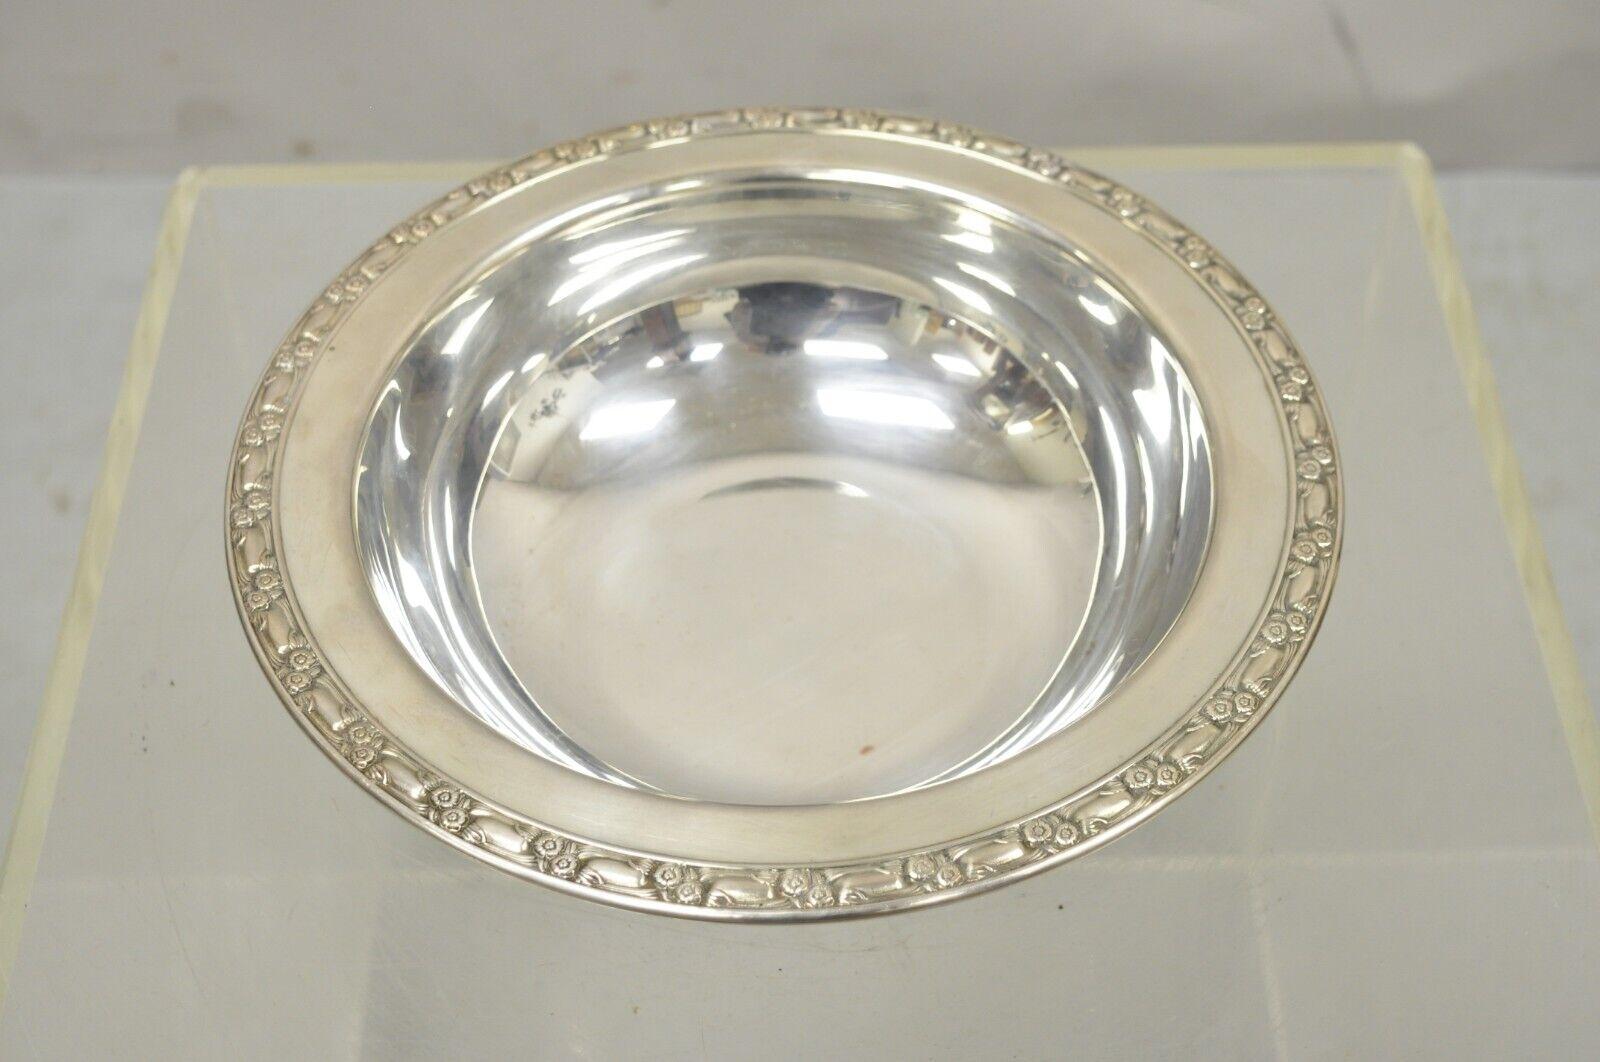 Vintage Oneida Ltd rose decorated silver plated 10.5